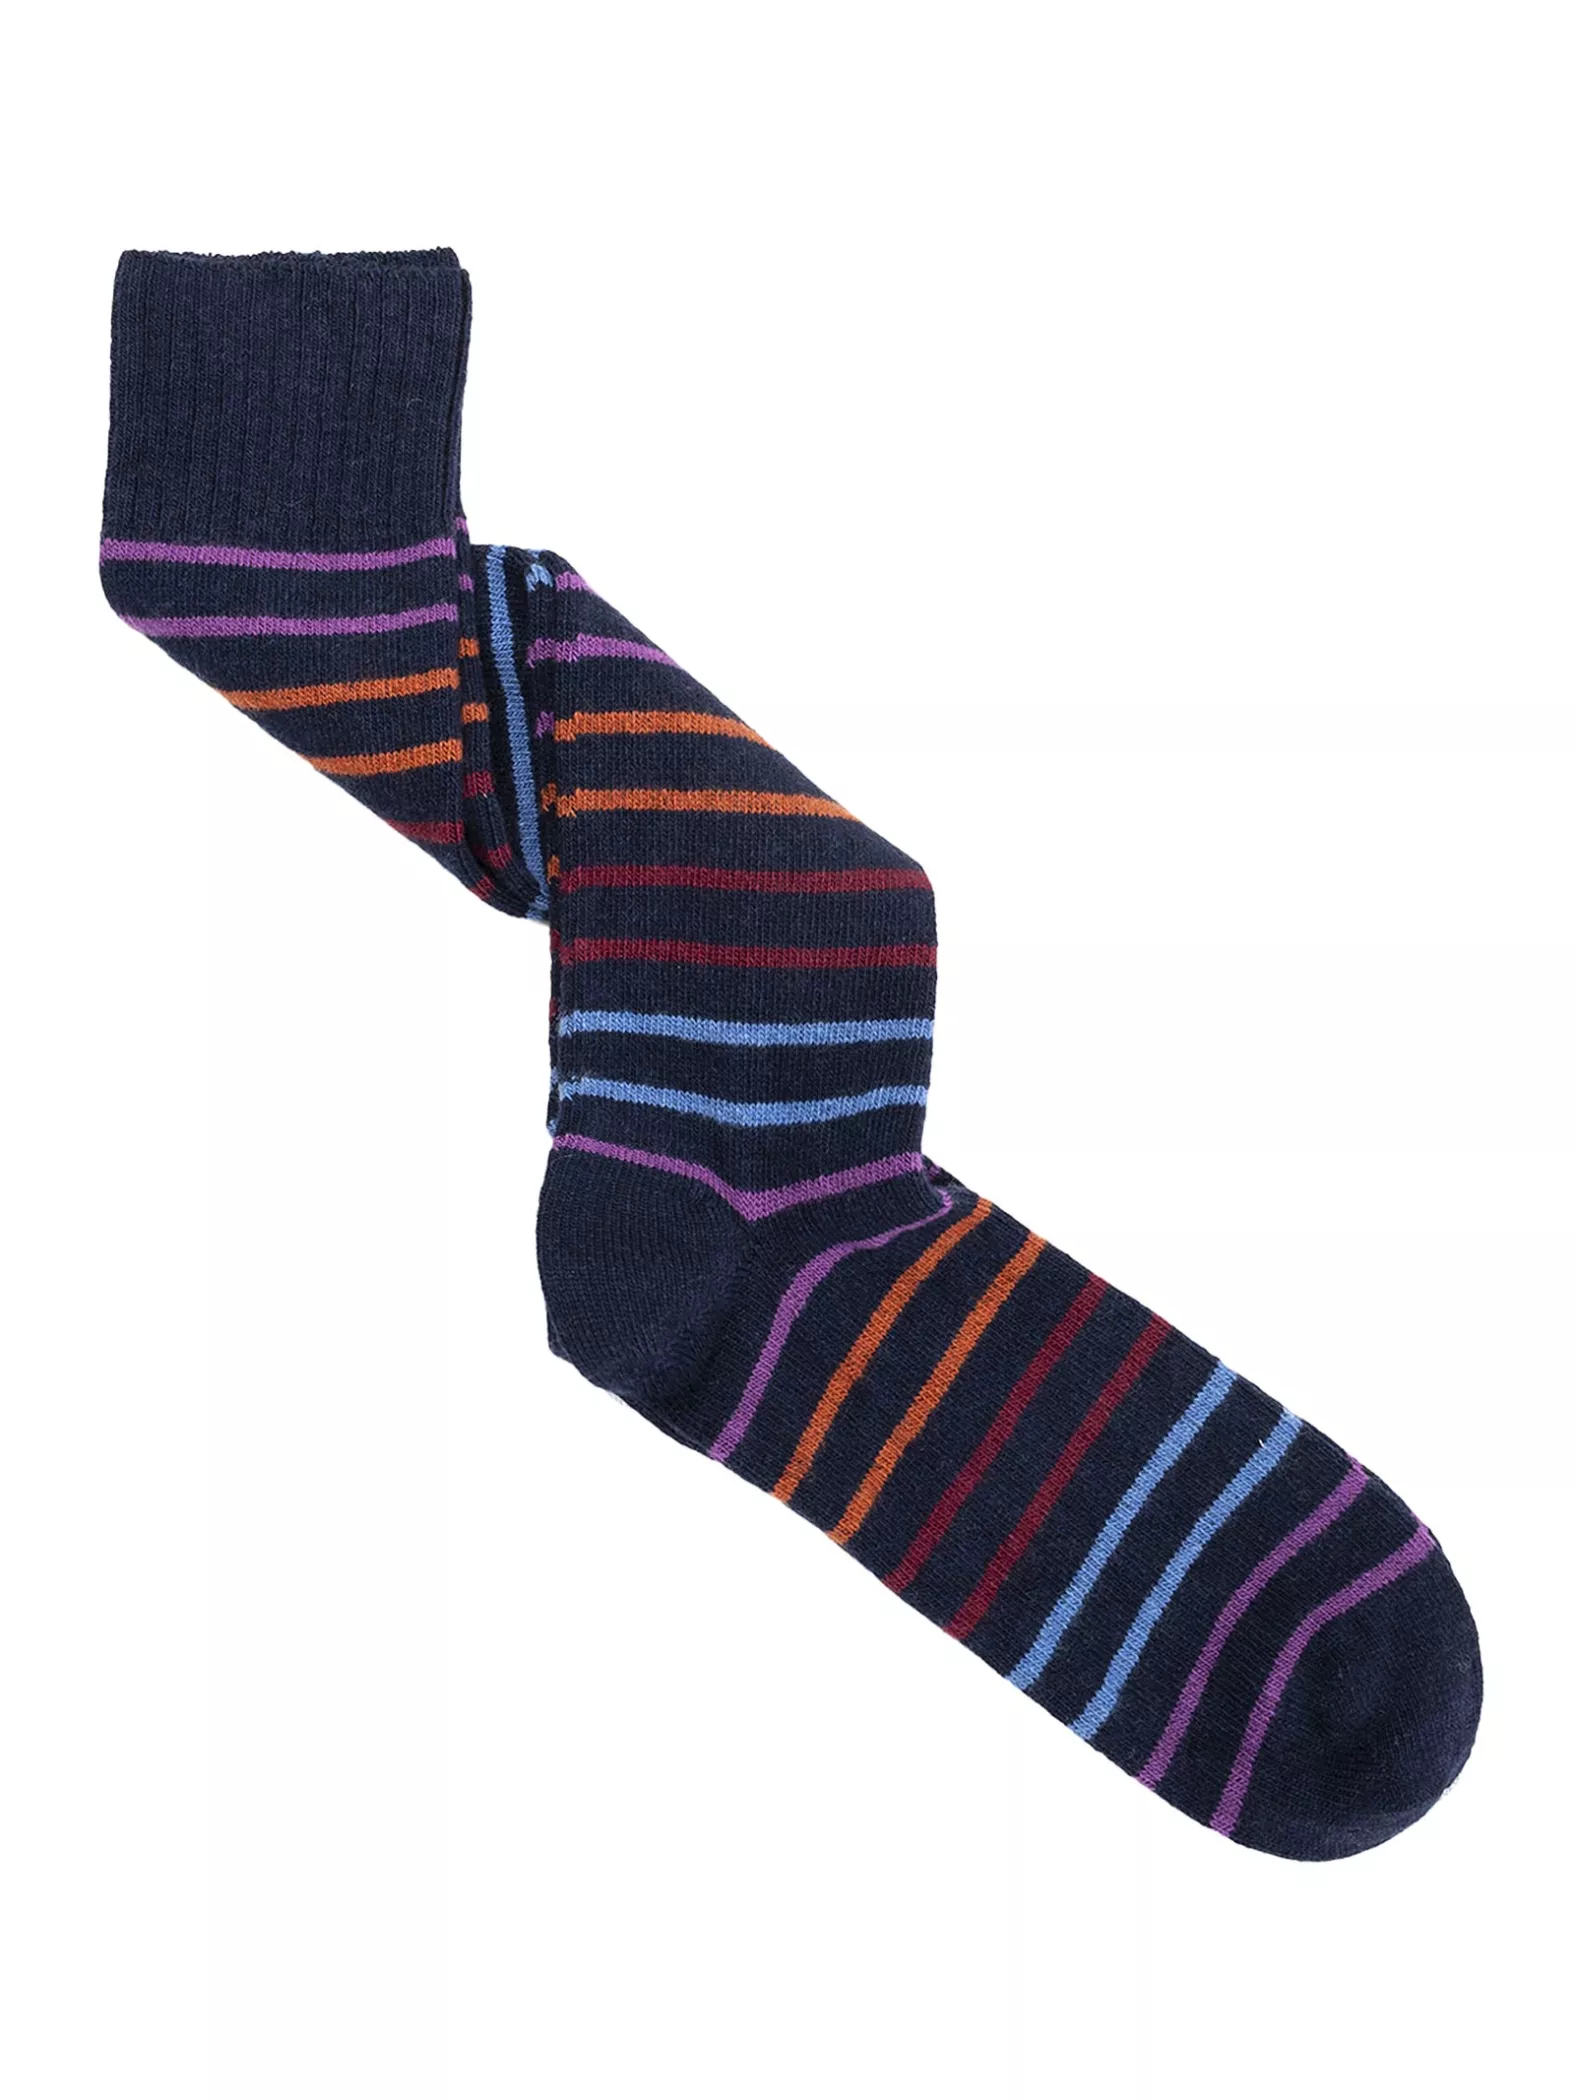 Knee High Cashmere Viscose Socks in Striped Pattern